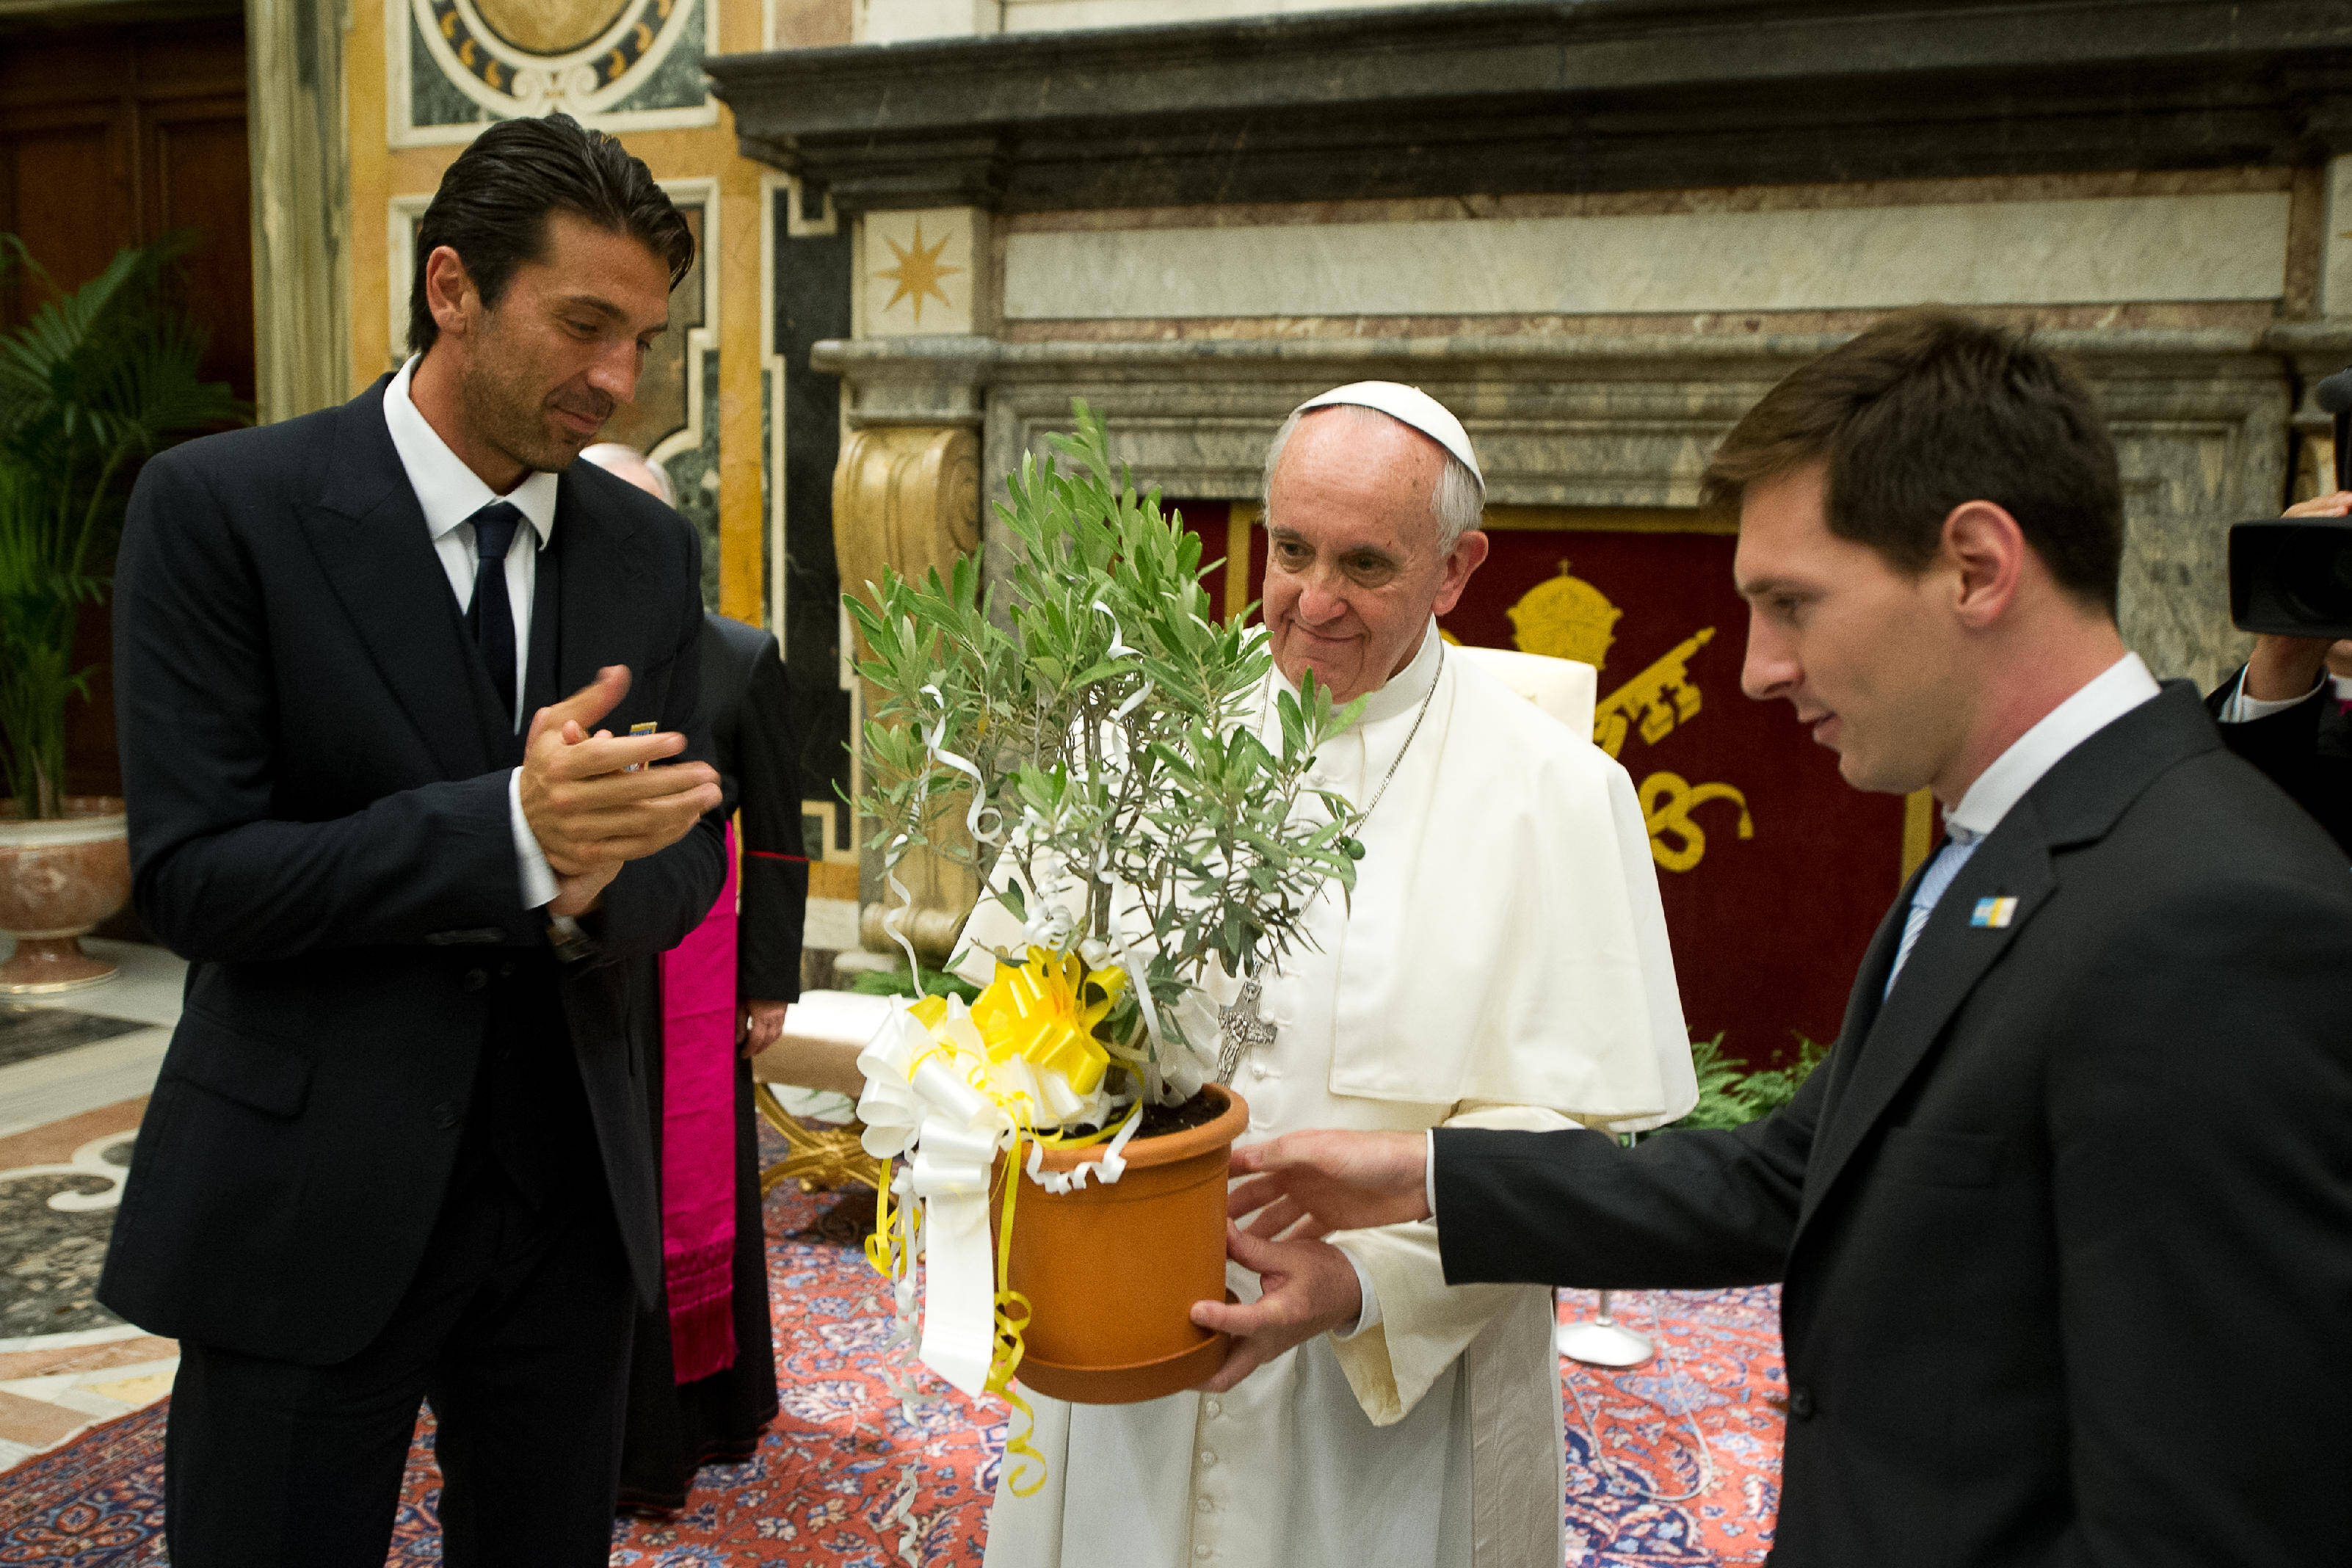 Foto: L'Osservatore Romano/AP